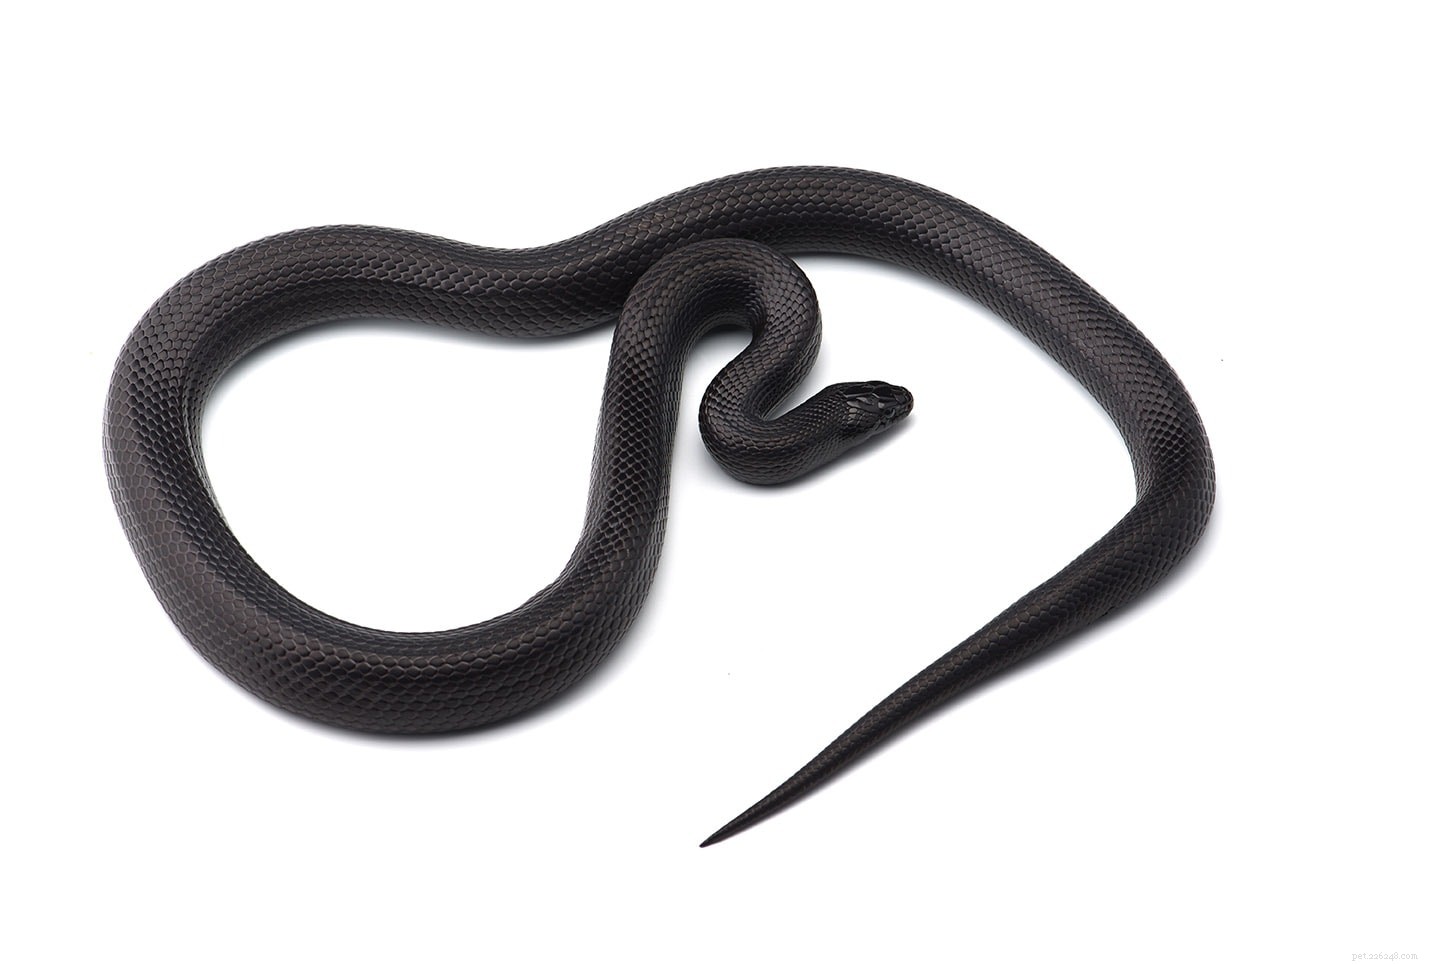 Serpente de Leite Negra